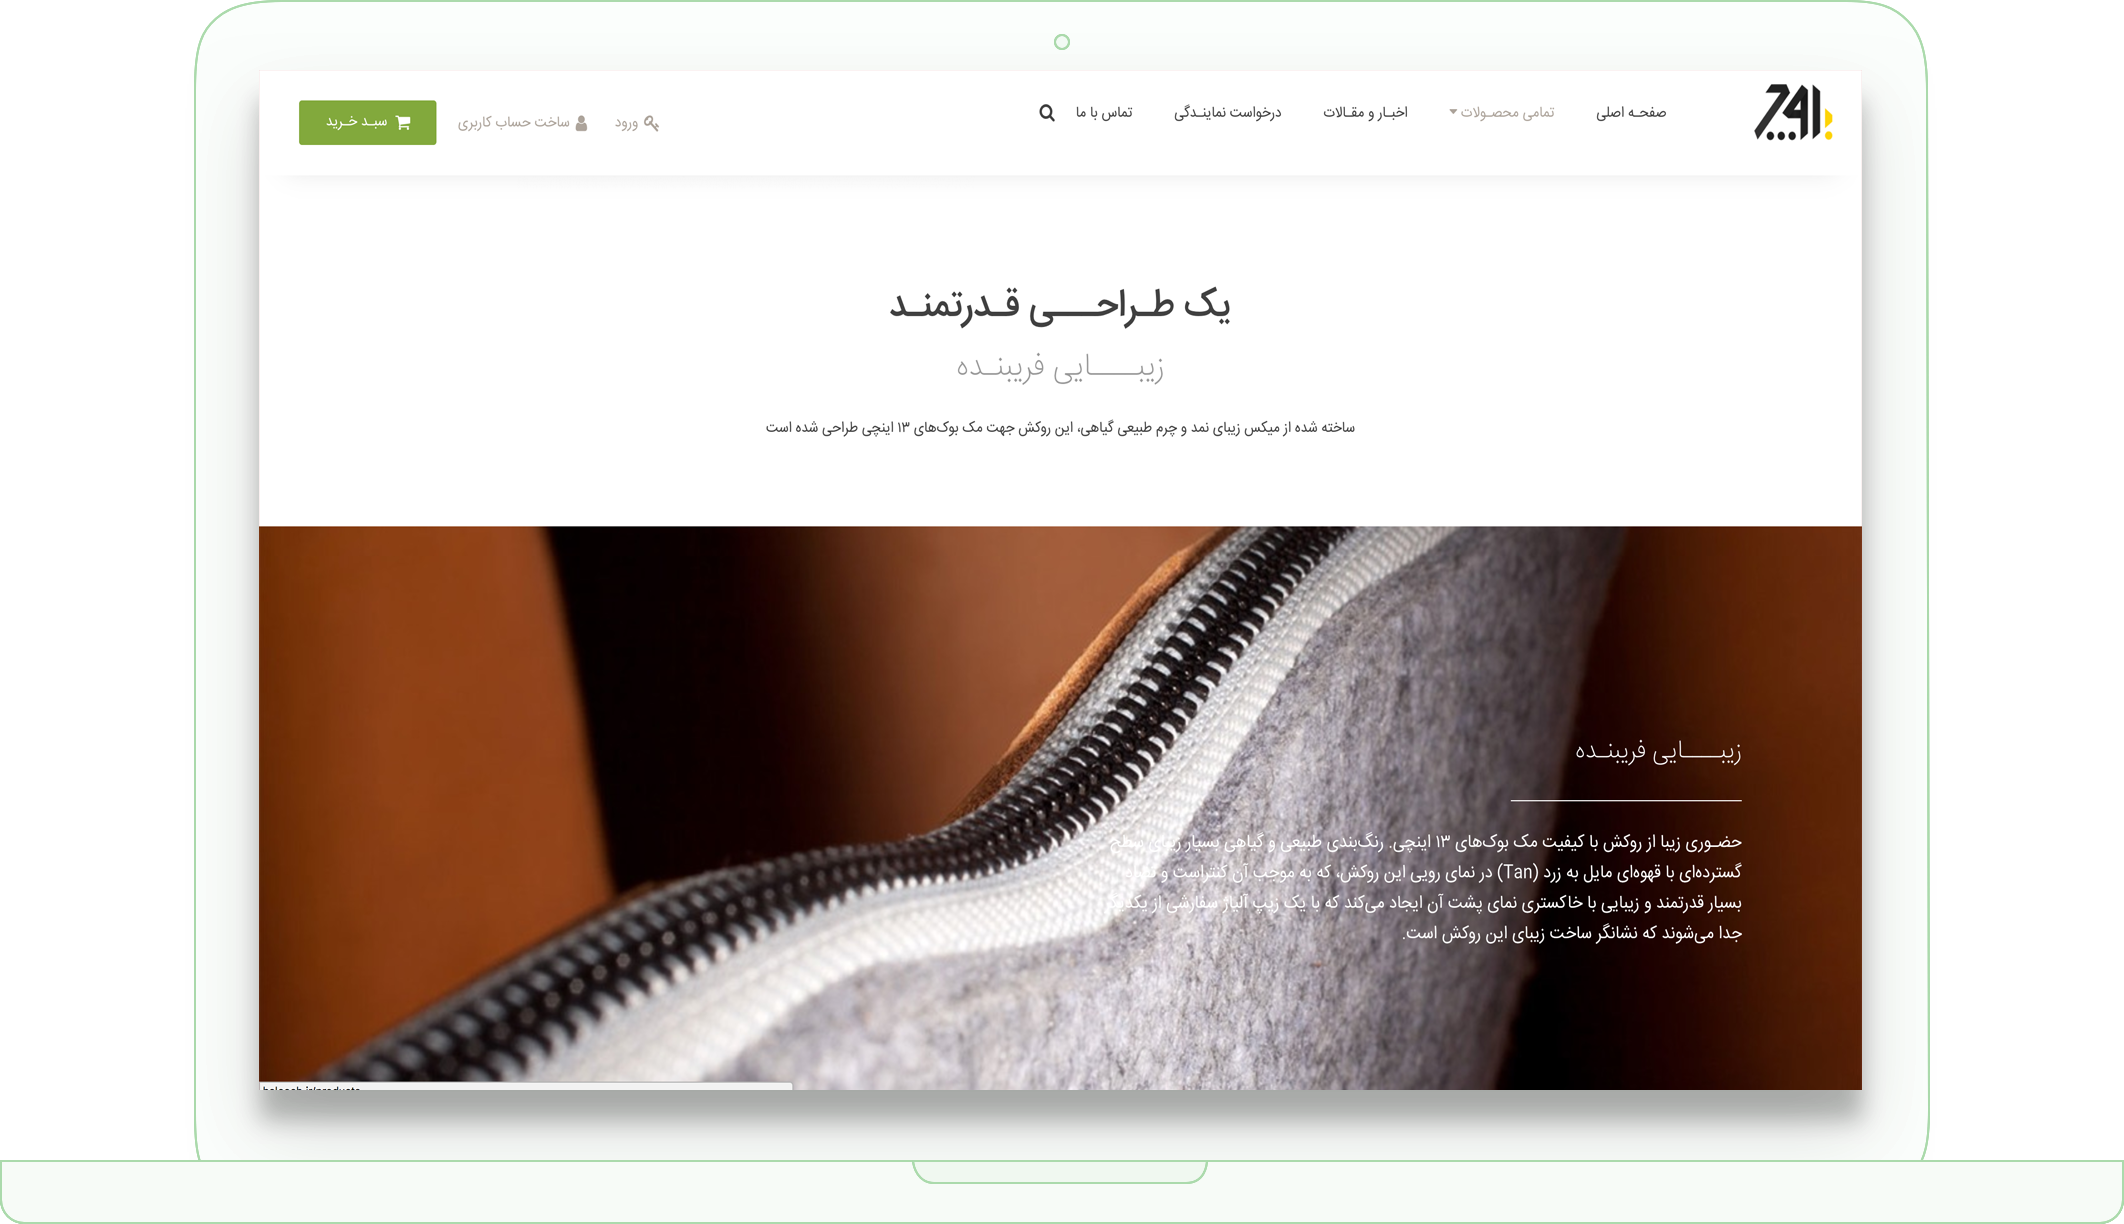 Balooch.ir Website Designed by Milaniz